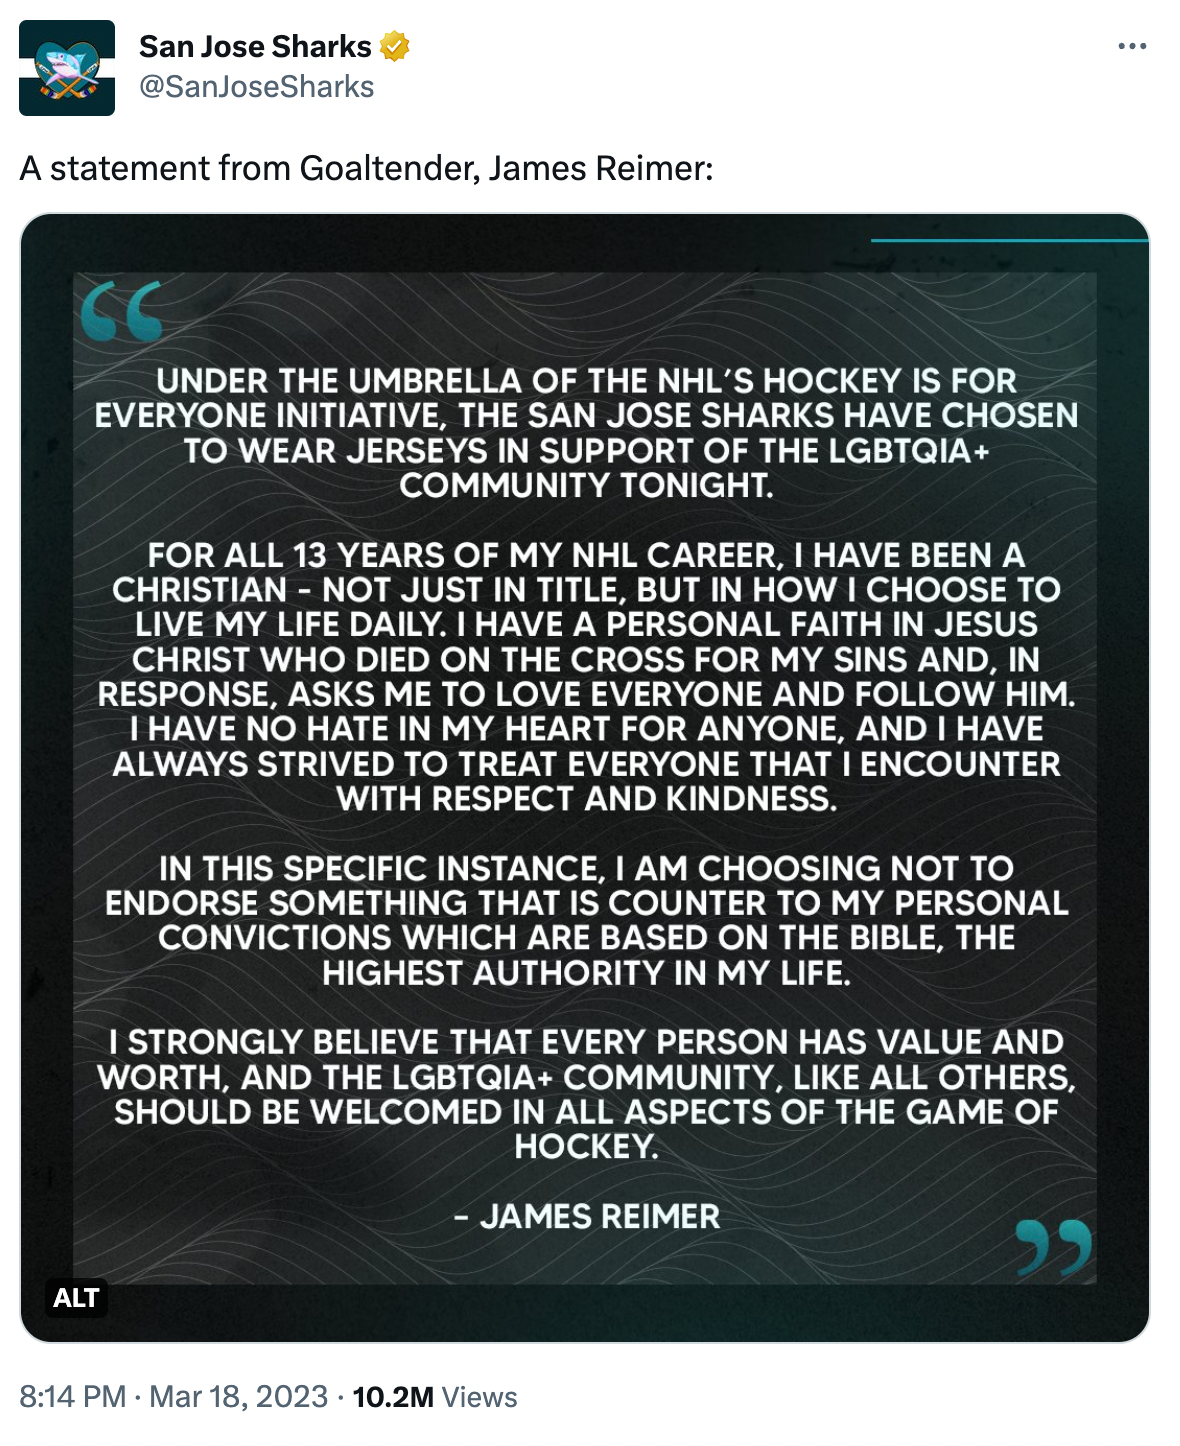 Sharks goalie James Reimer declines to wear Pride jersey